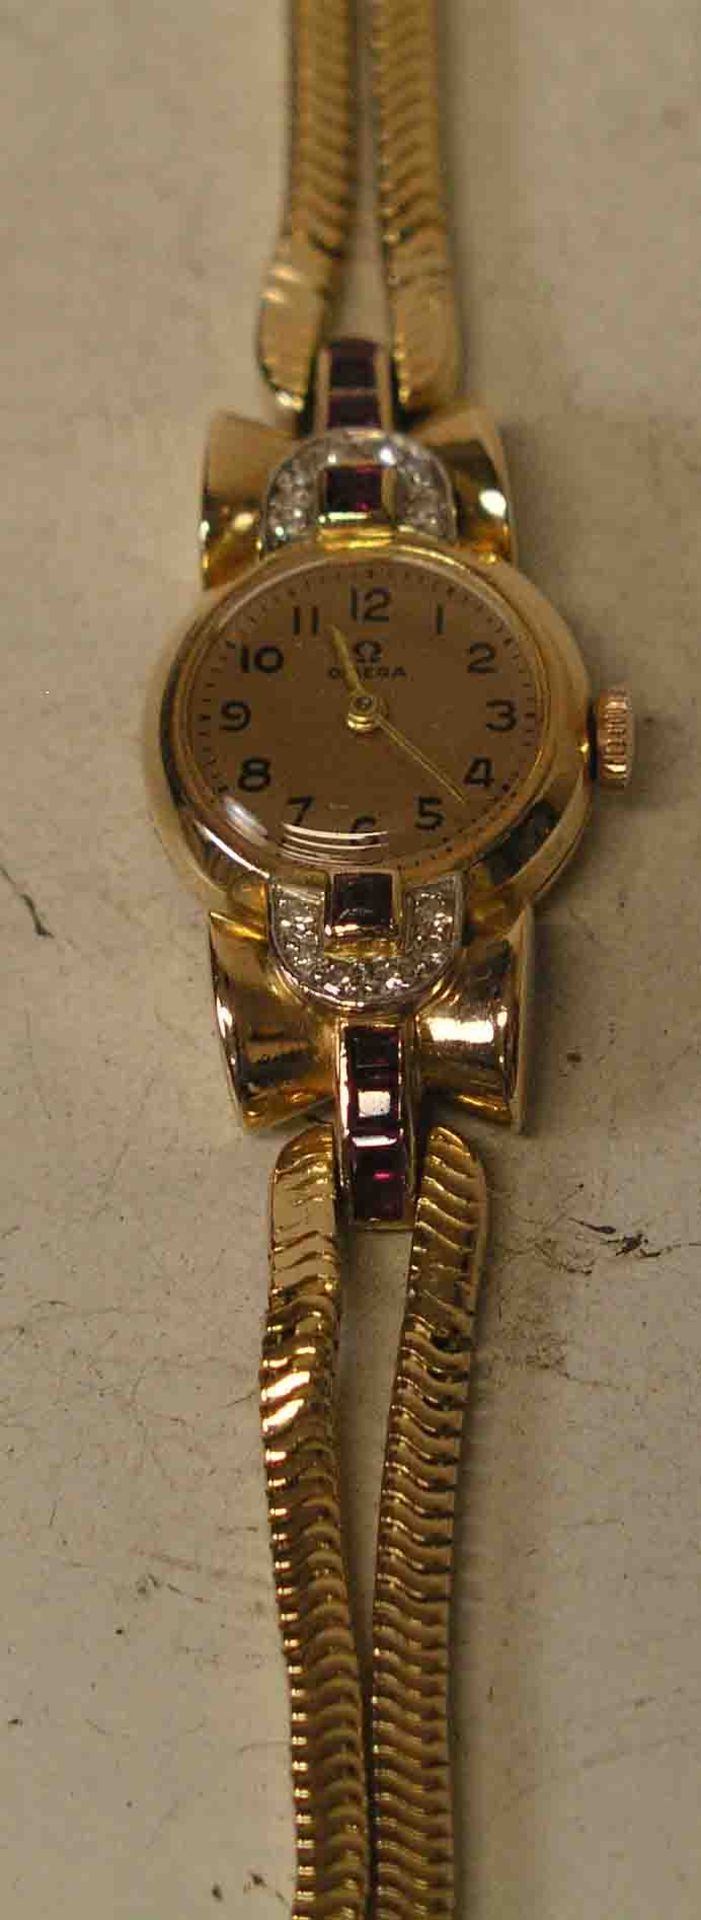 Damenarmbanduhr "Omega". 18 kt. Gold. Zifferblatt mit arabischen Zahlen. Handaufzug.